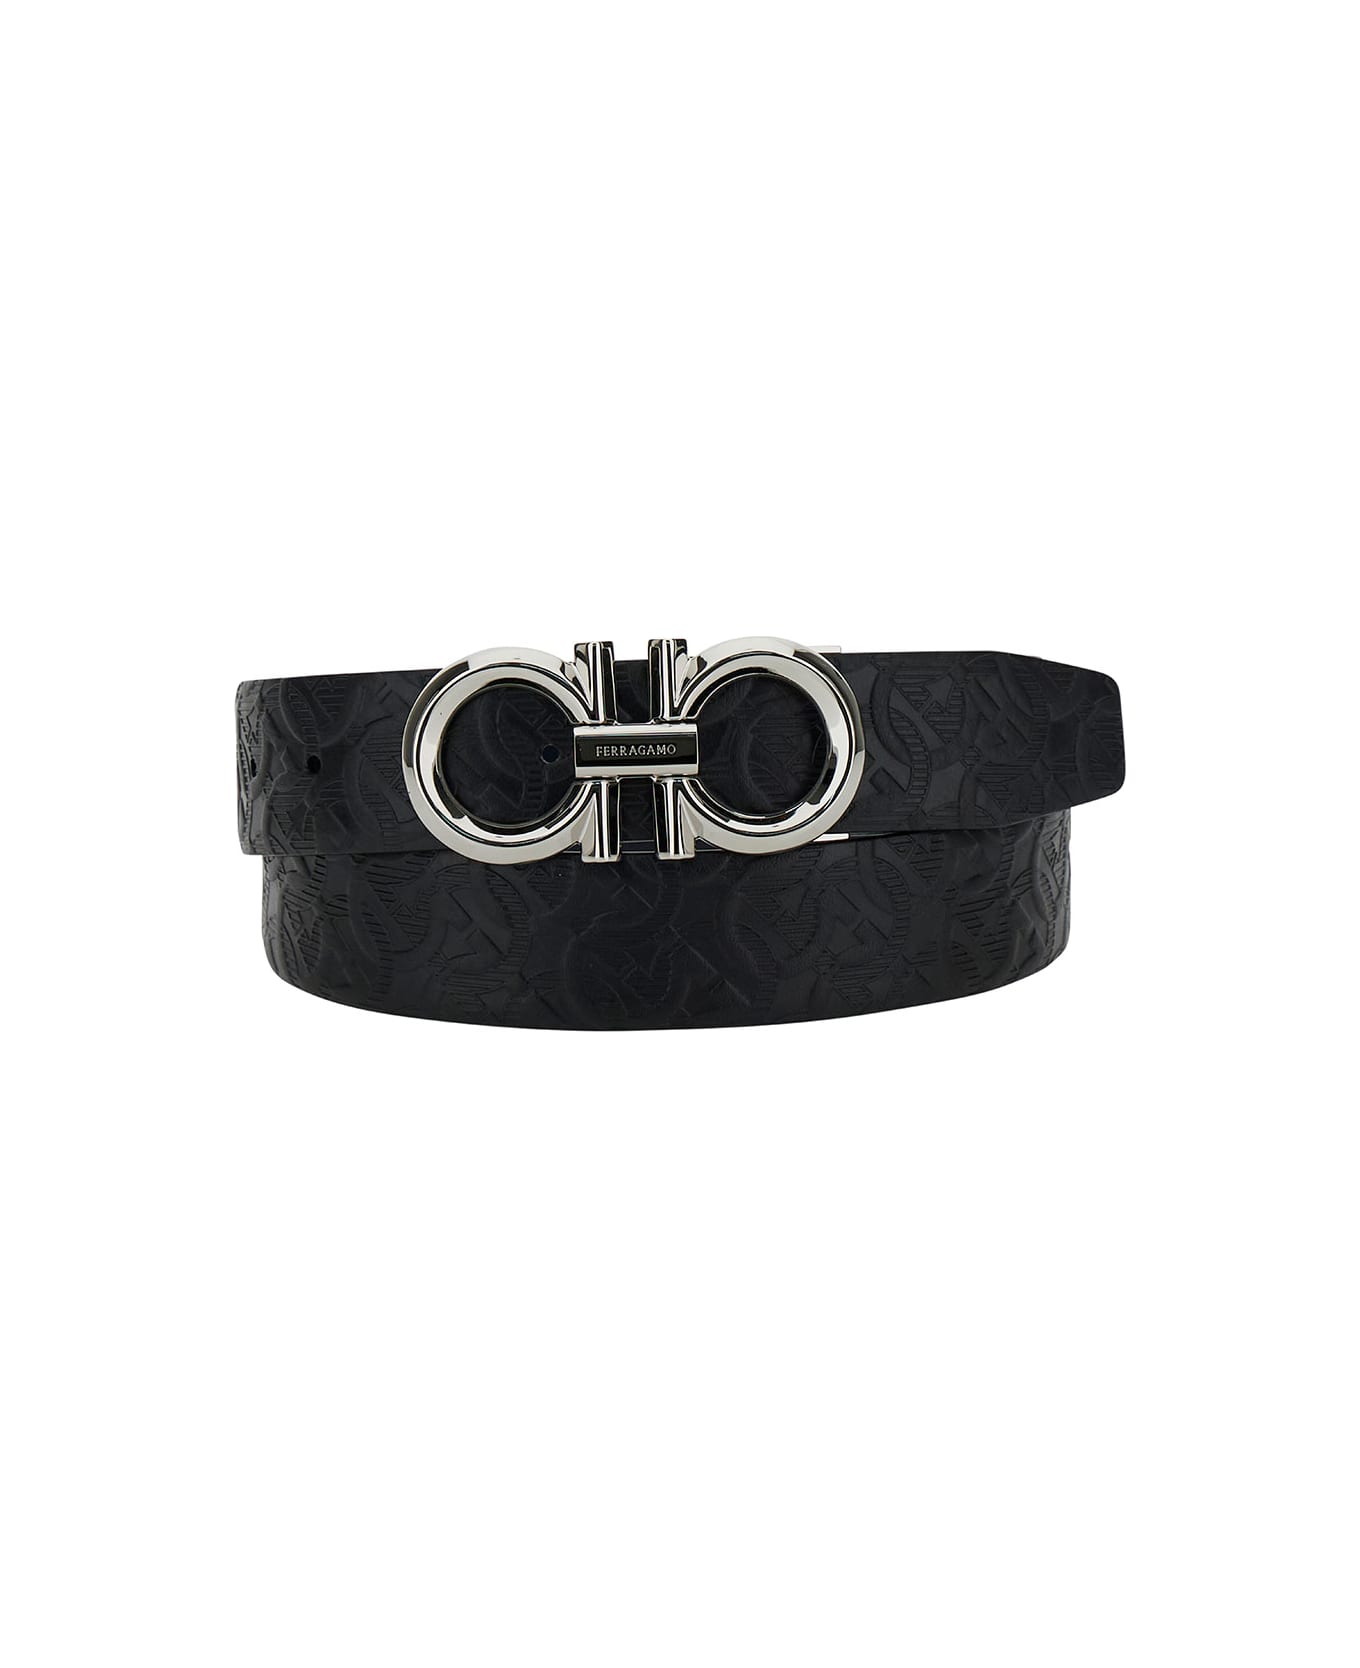 Ferragamo Black Leather Belt With Logo Buckle - Black